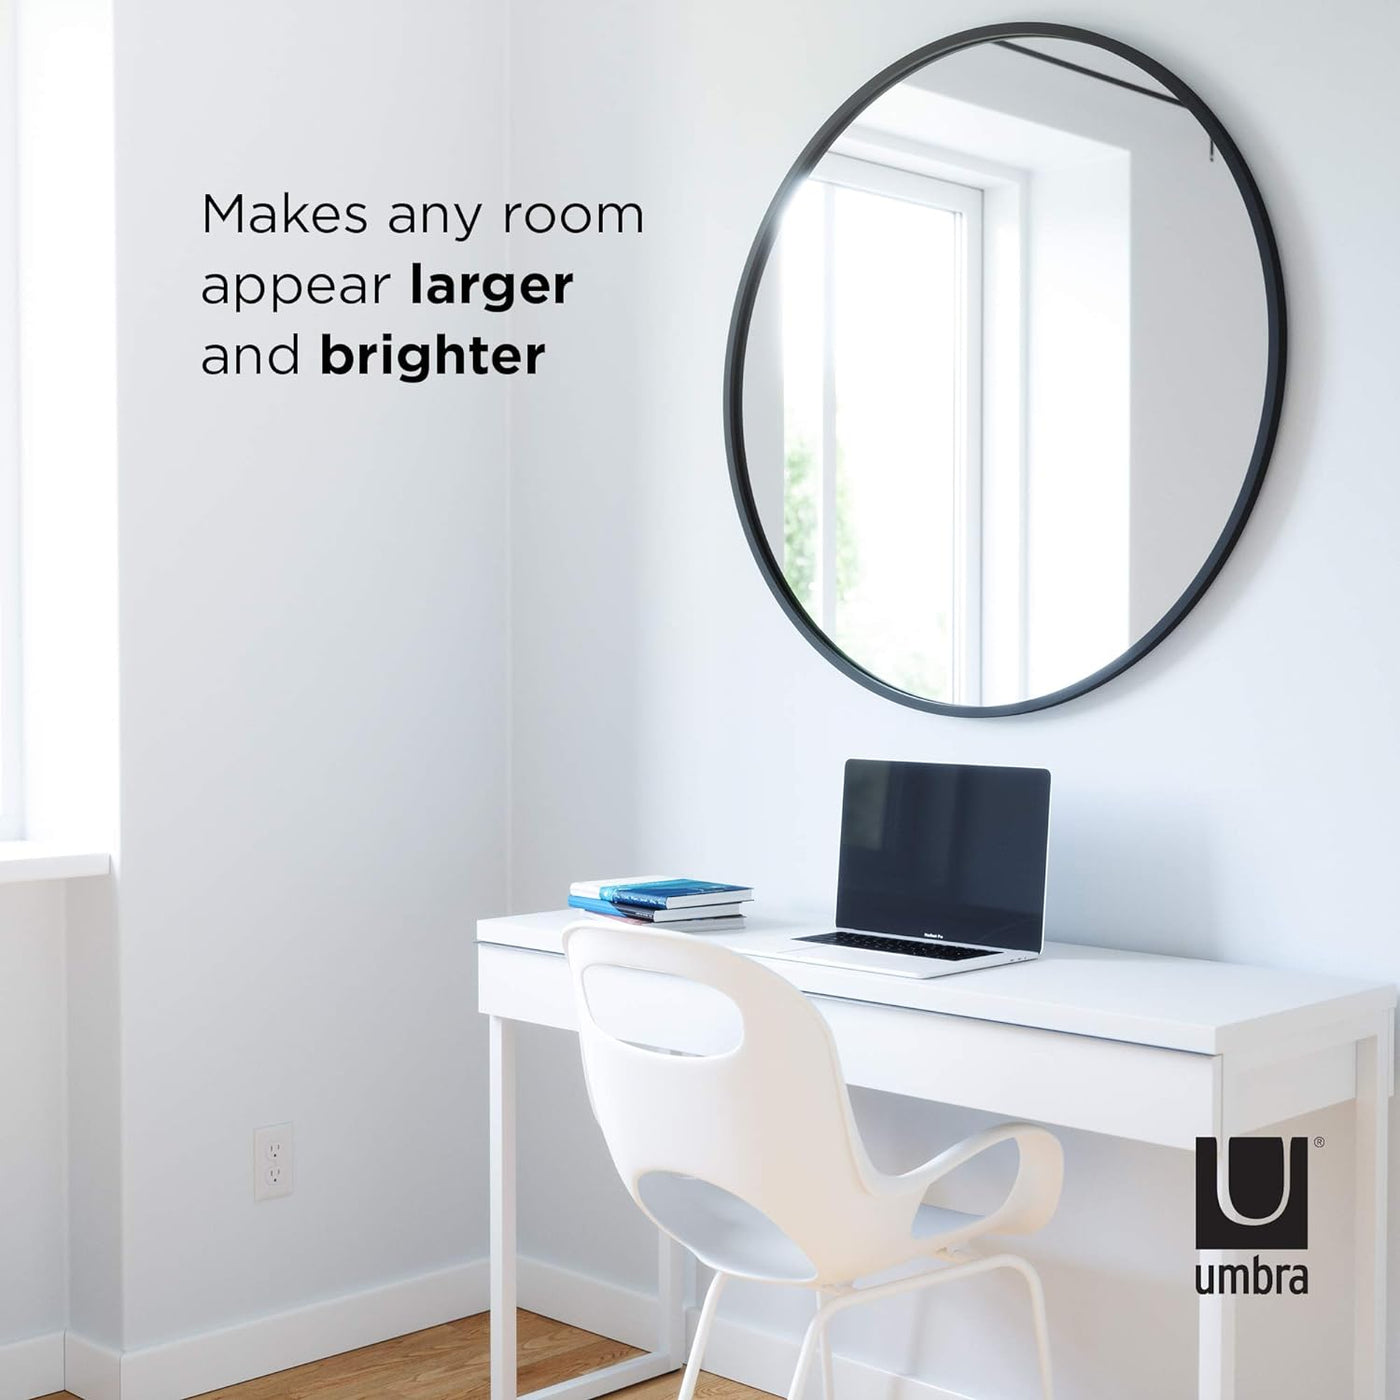 Umbra Hub Wall Mirror - $65